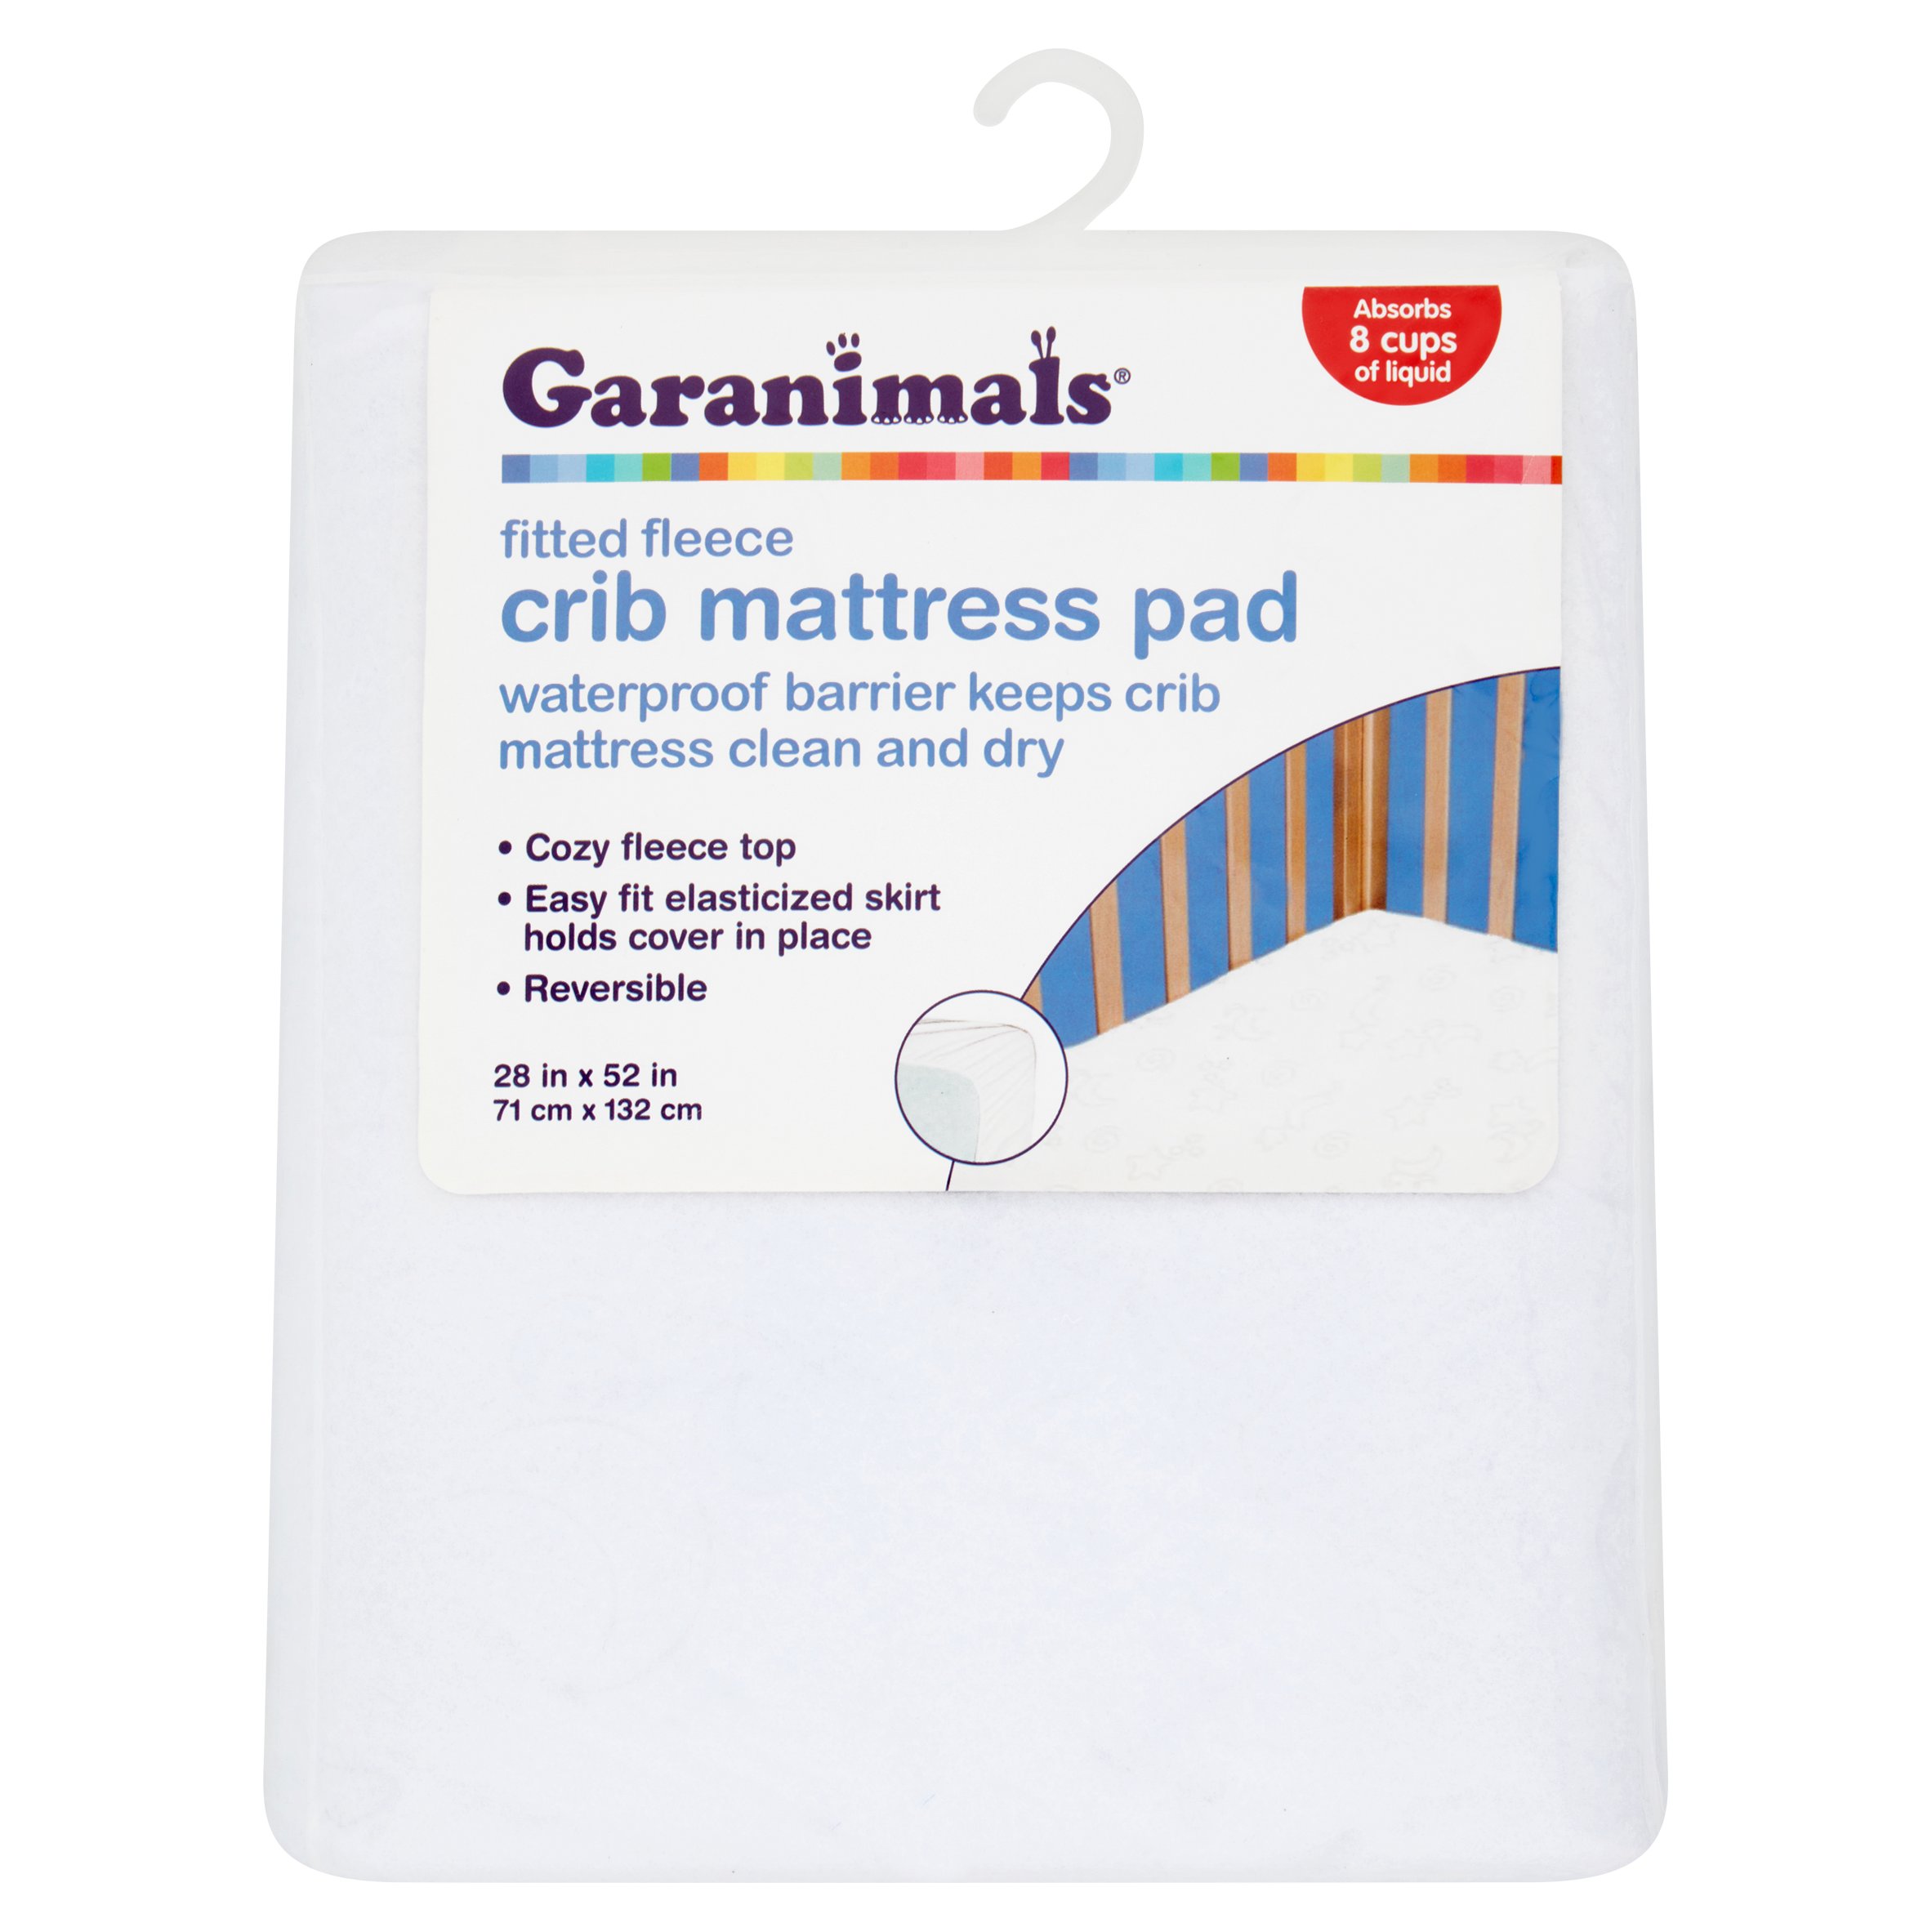 Garanimals Fitted Fleece Crib Mattress Pad - image 1 of 5